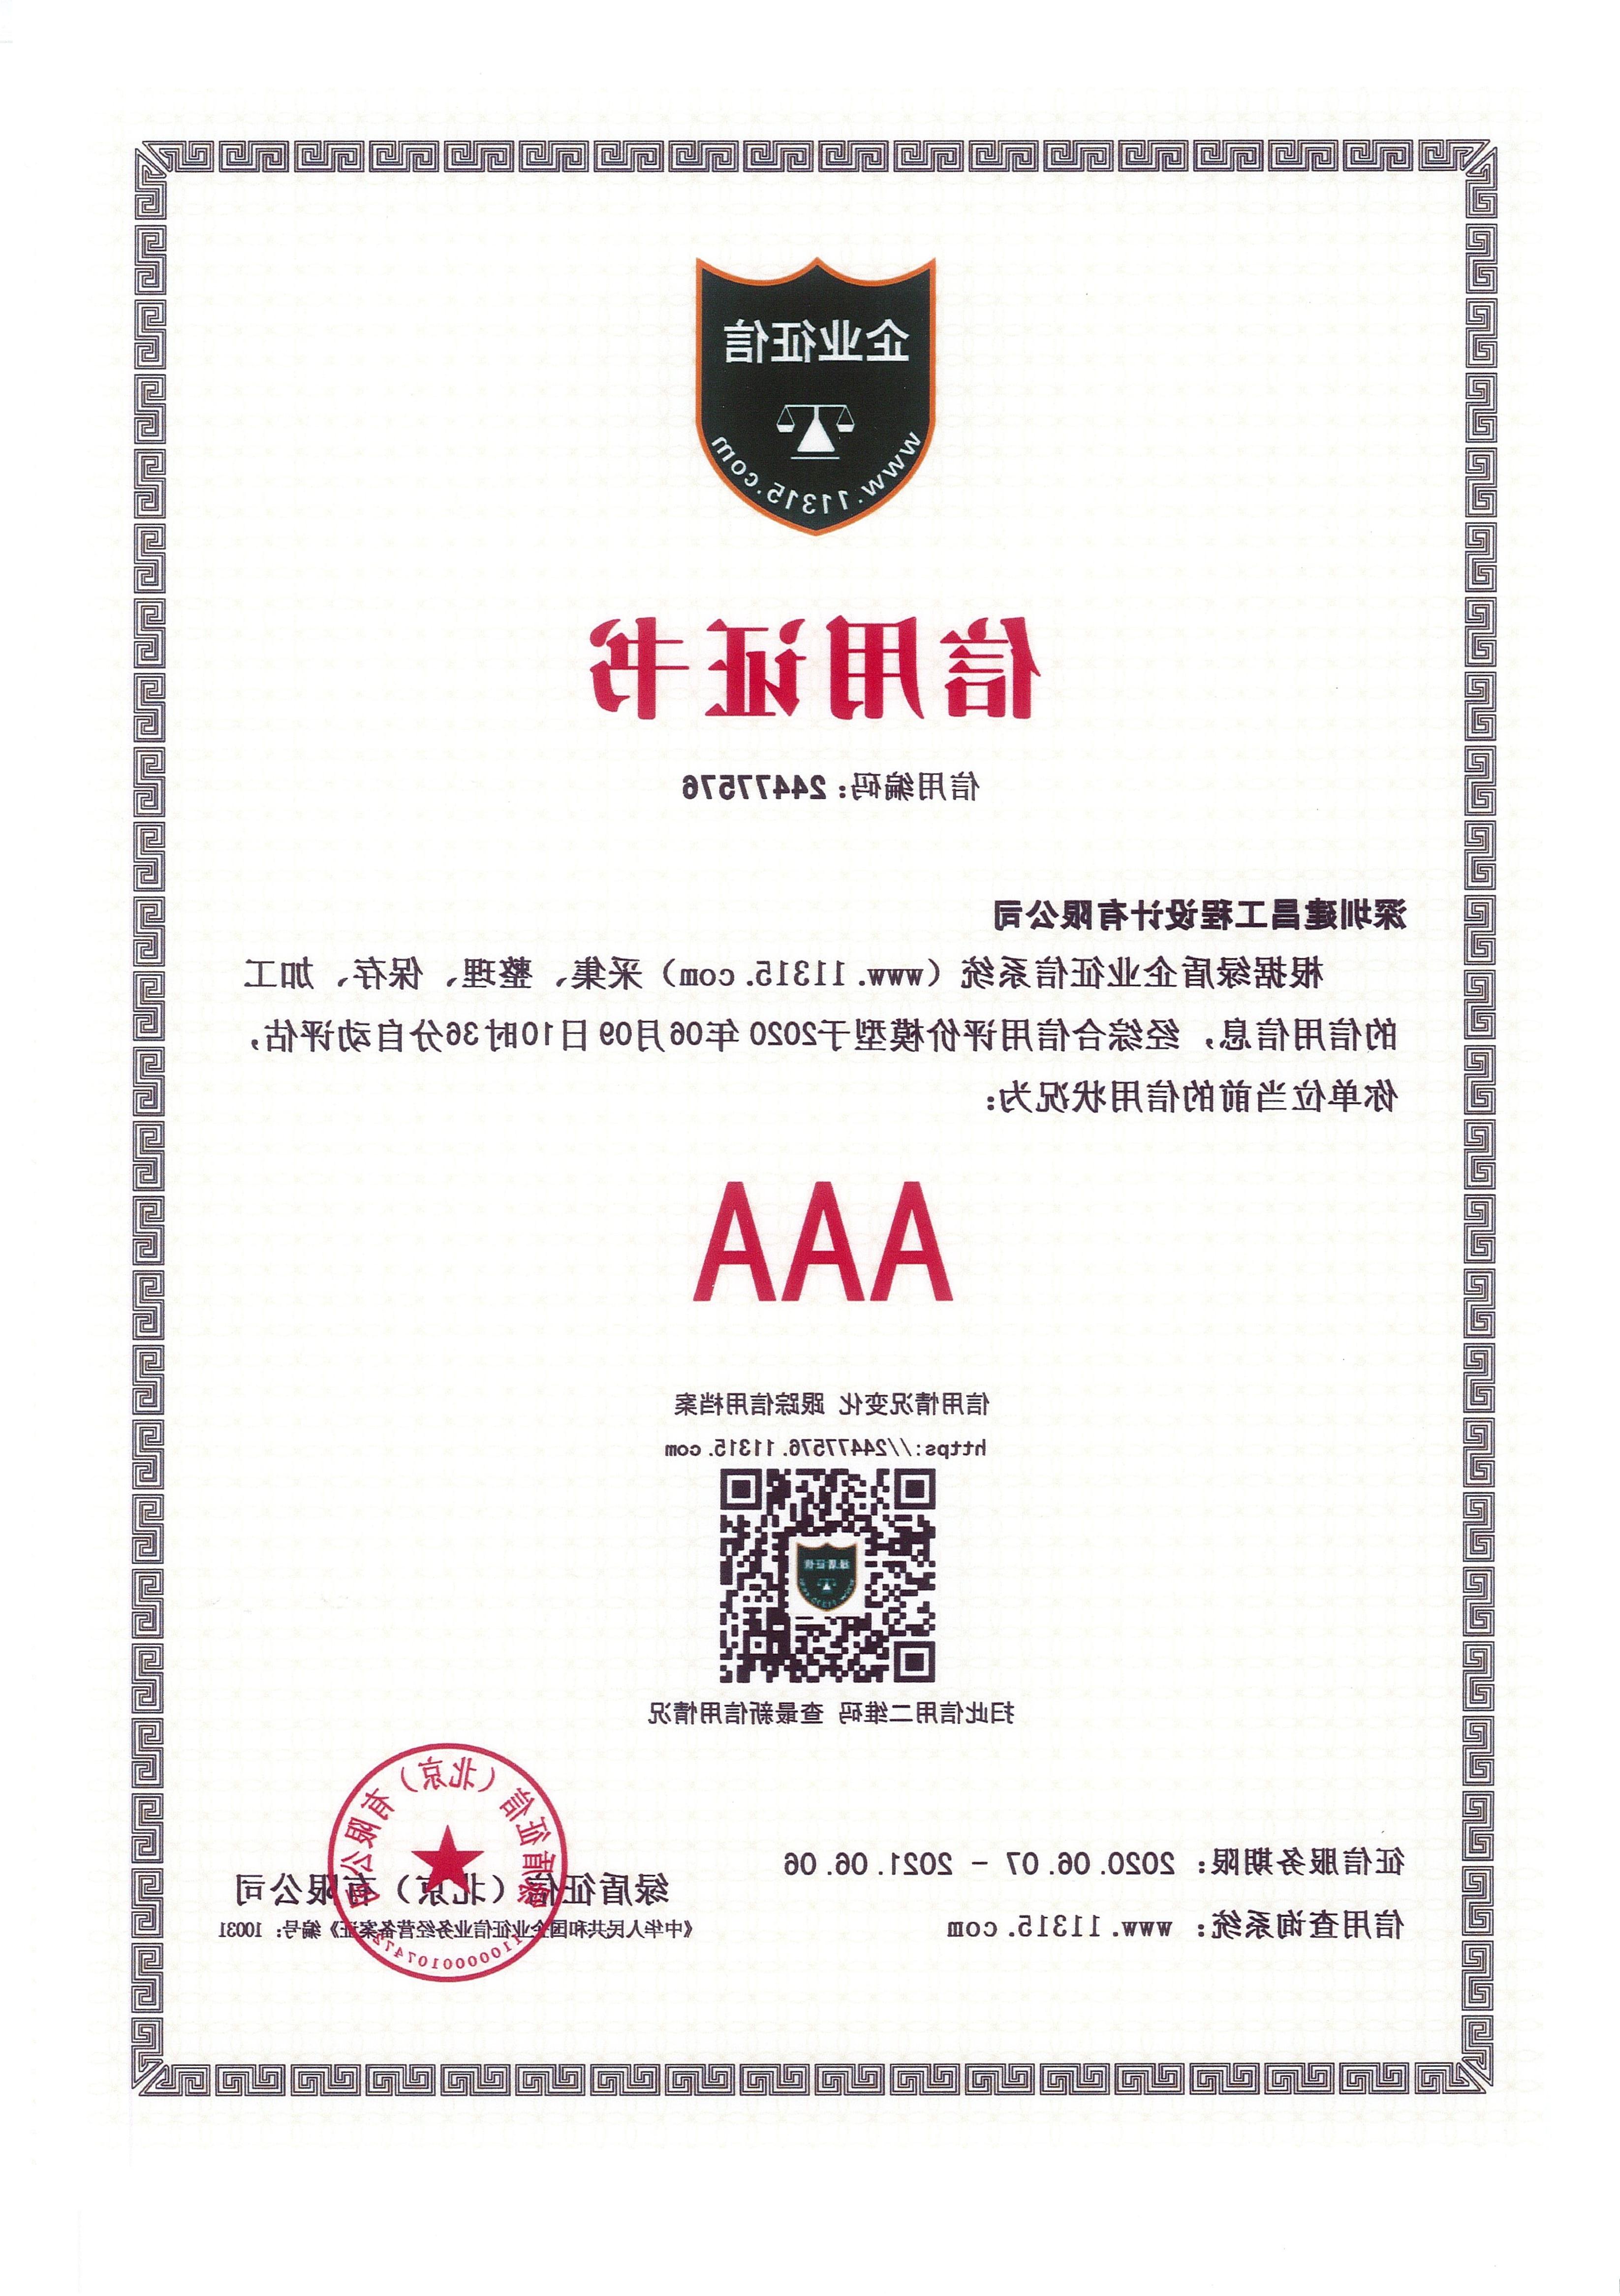 AAA级企业征信信用等级证书